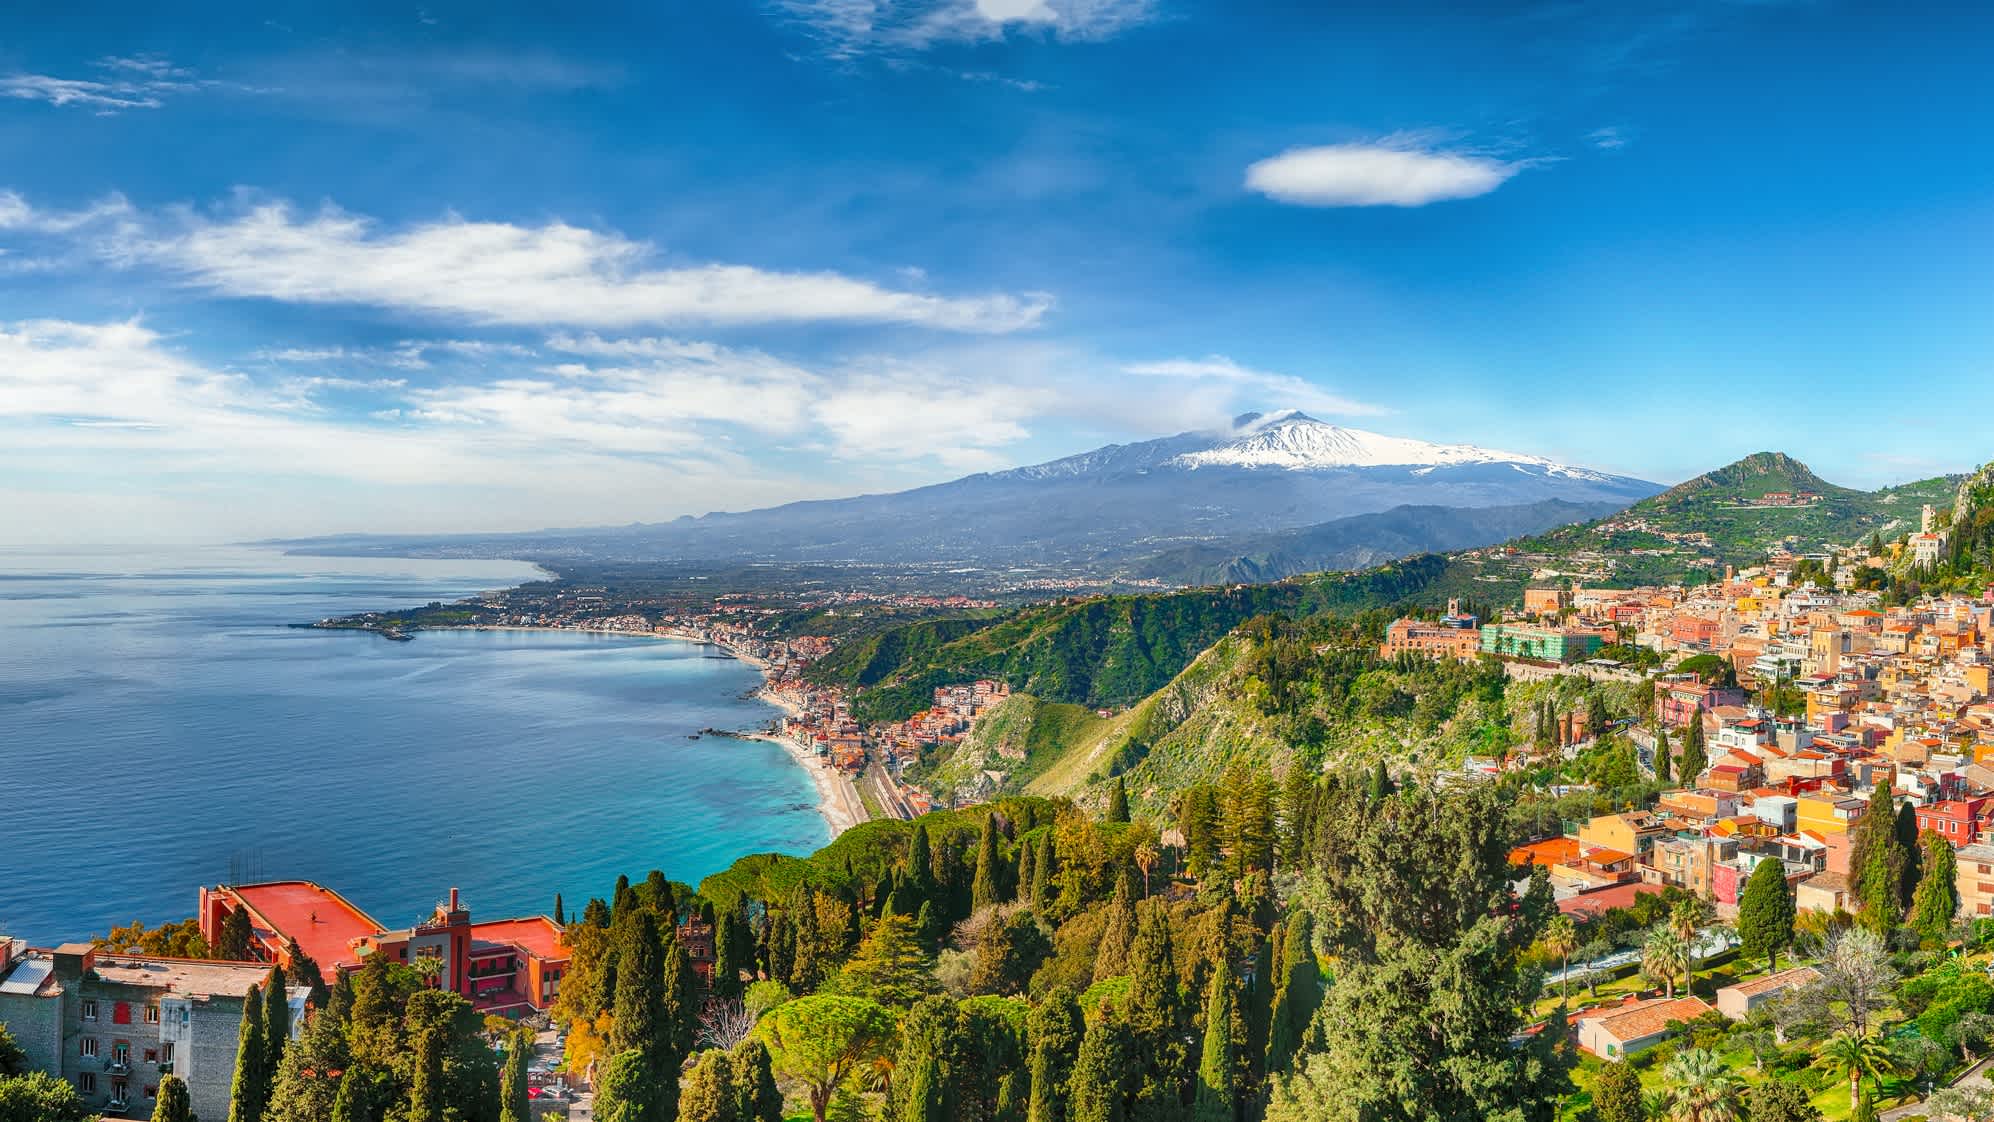 Vue de Taormine et du volcan Etna, Sicile, Italie.

